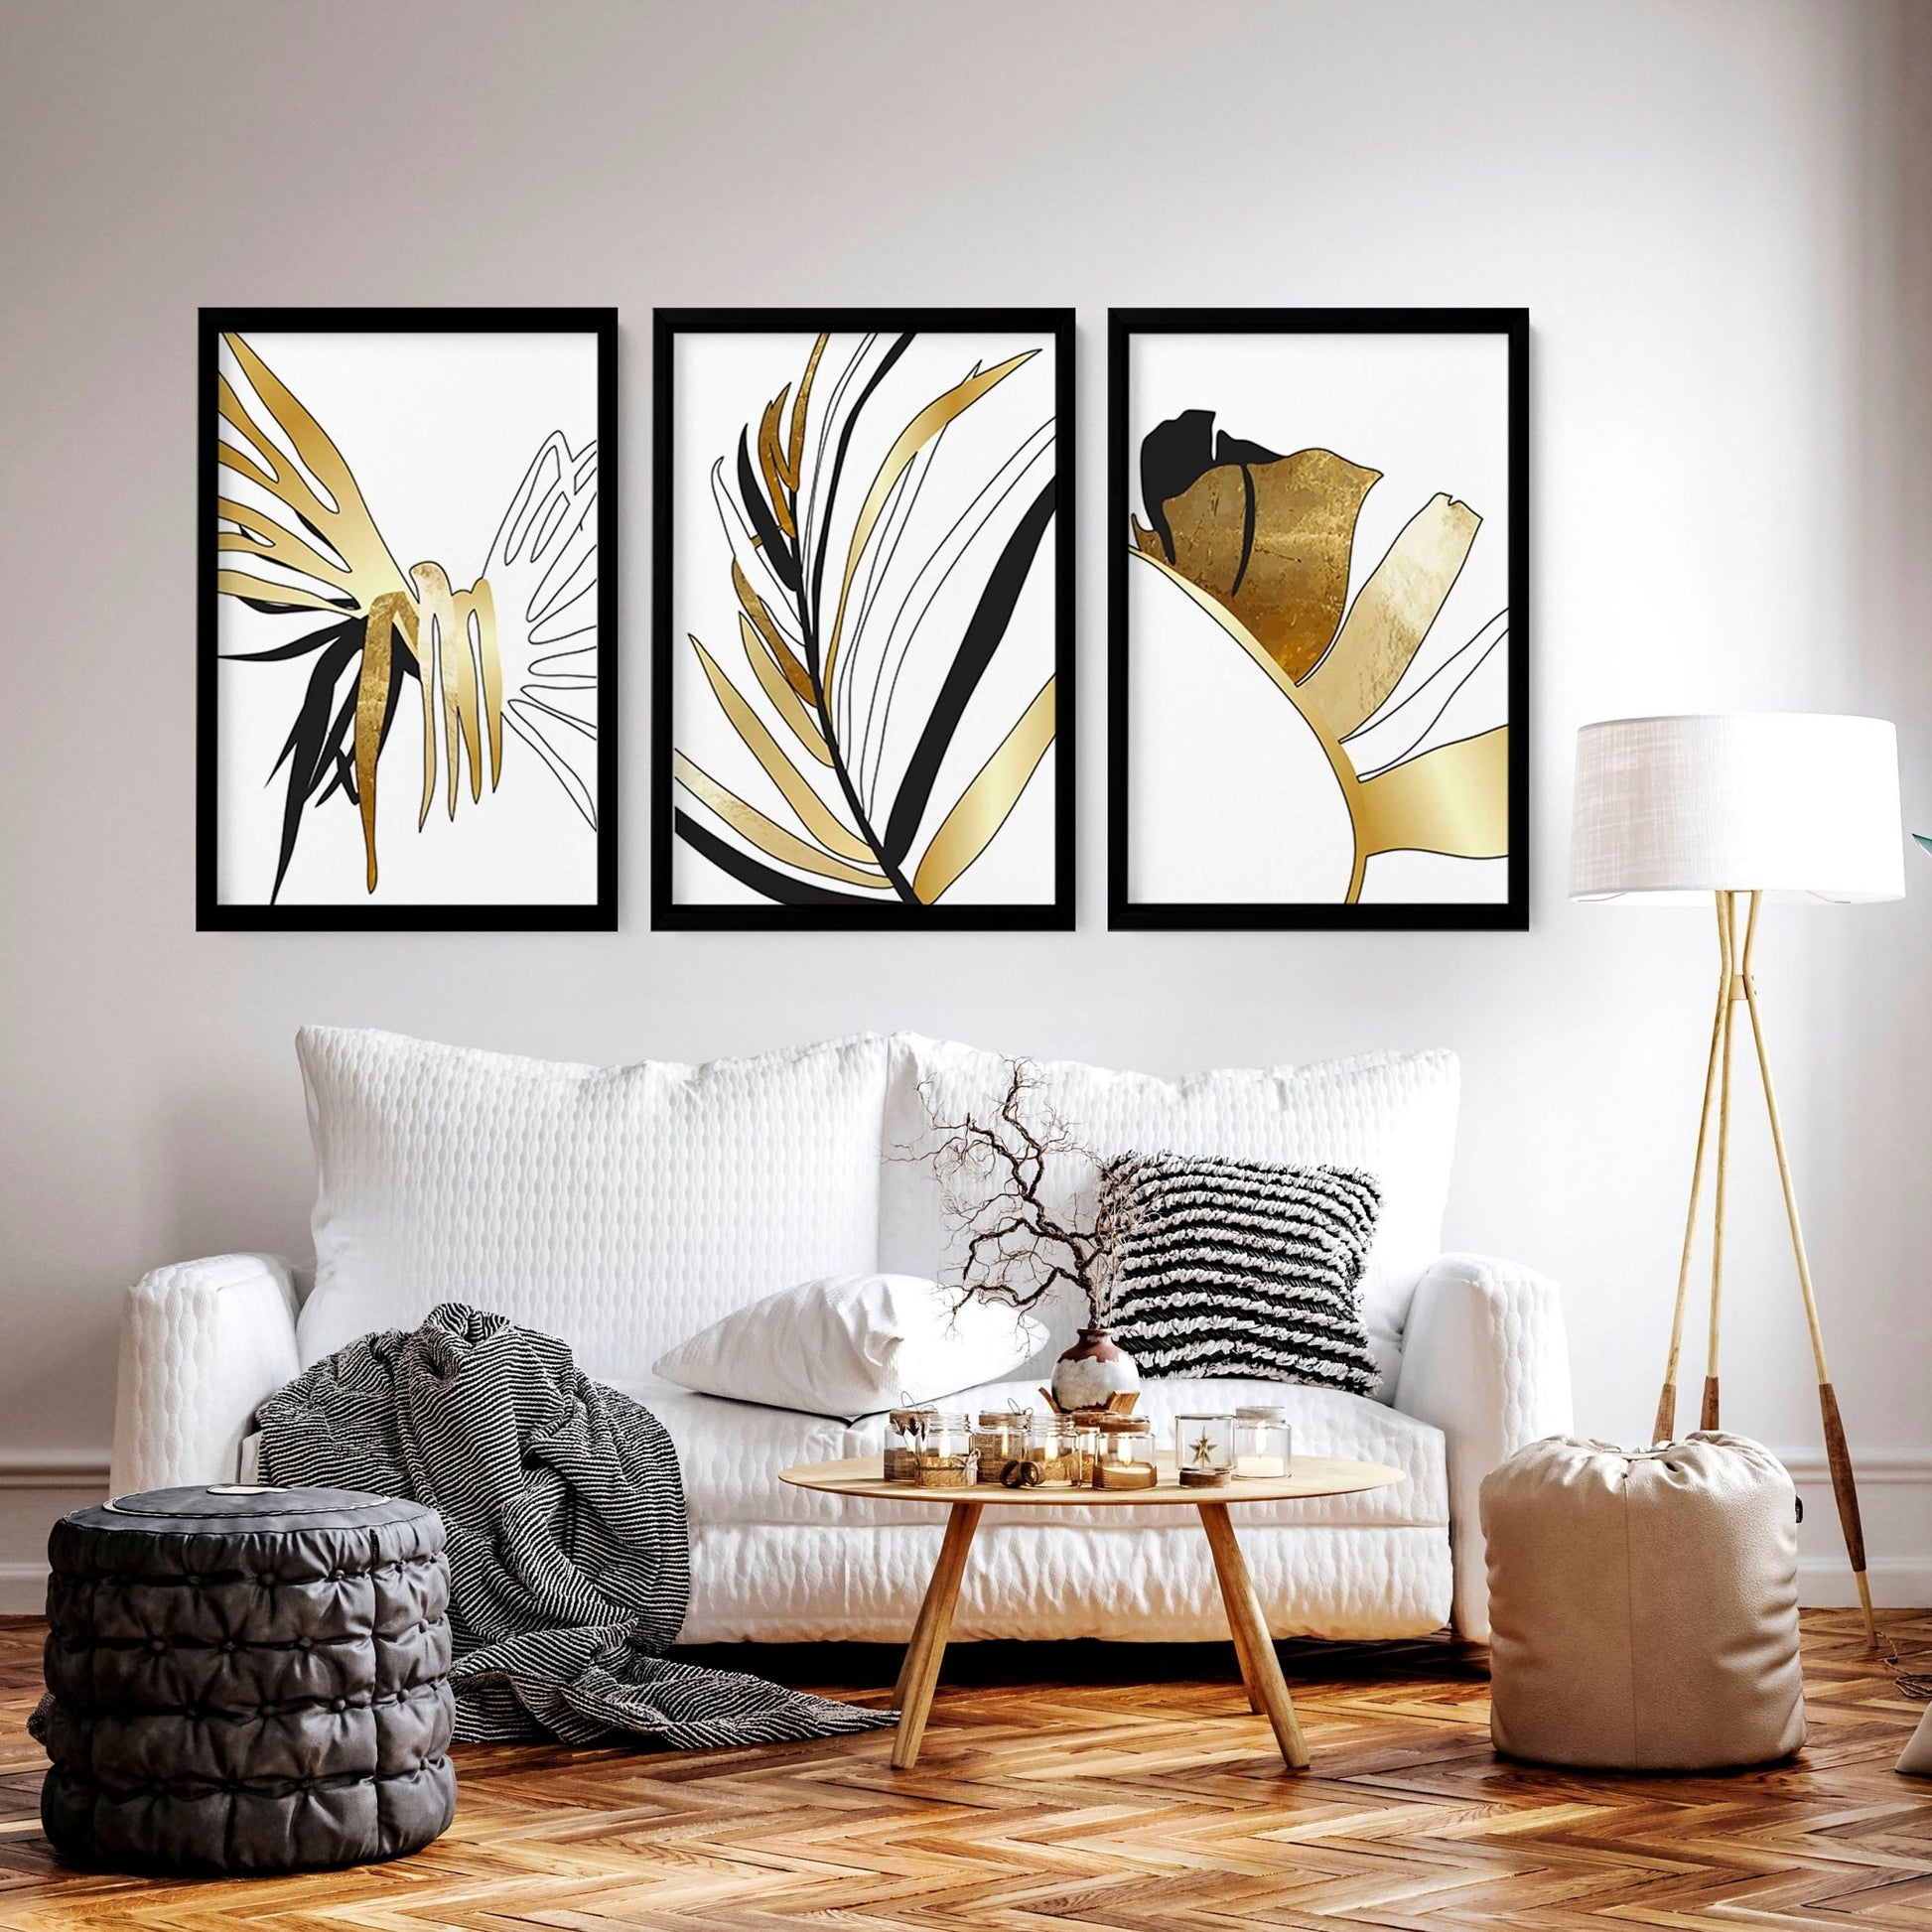 Modern tropical living room decor | set of 3 wall art prints - About Wall Art